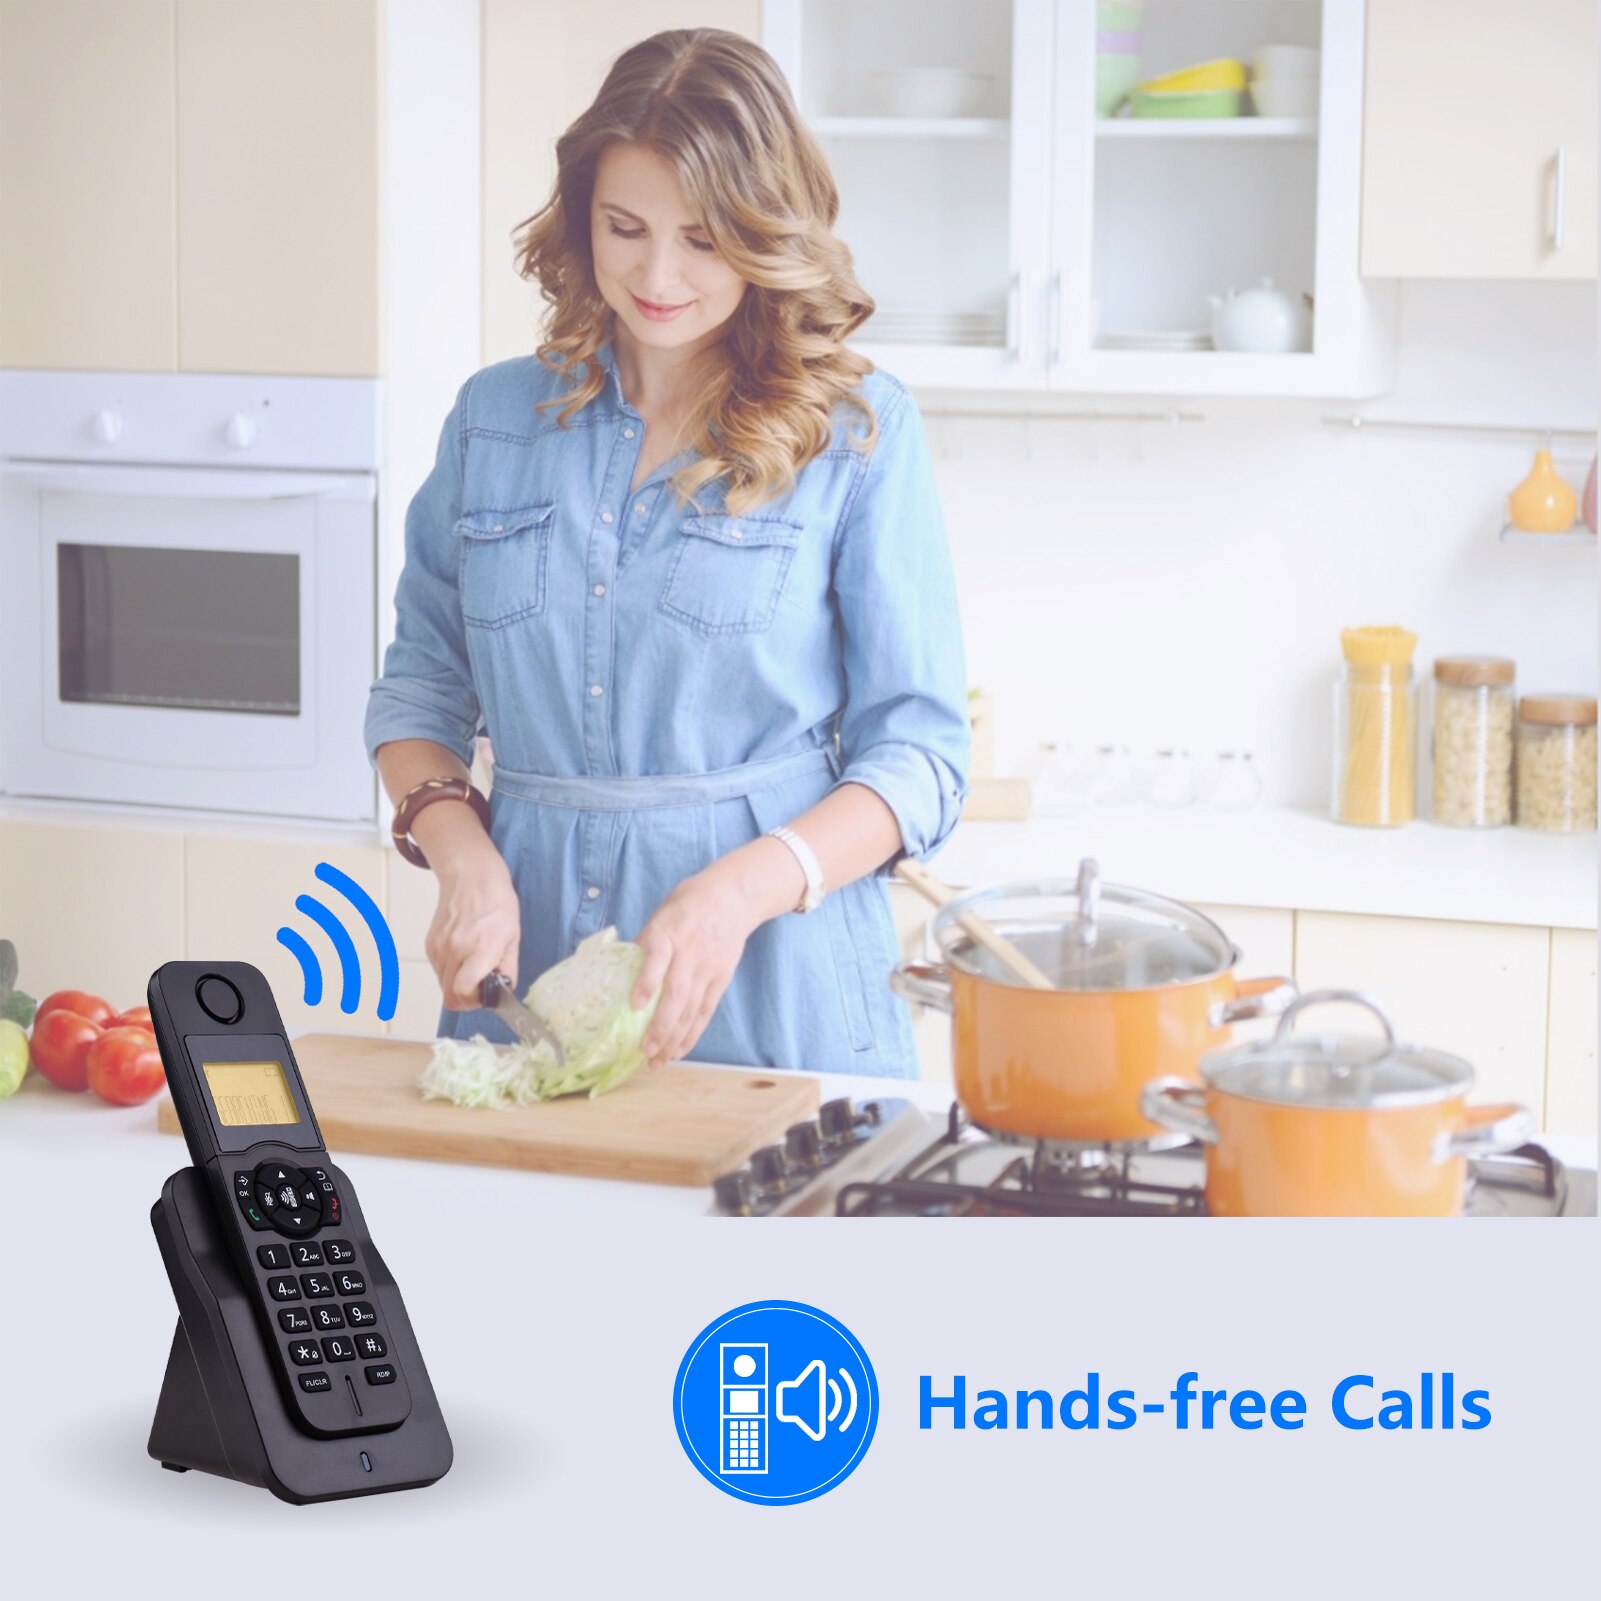 T-l-phone-sans-fil-extensible-avec-cran-LCD-identification-de-l-appelant-appels-mains-libres